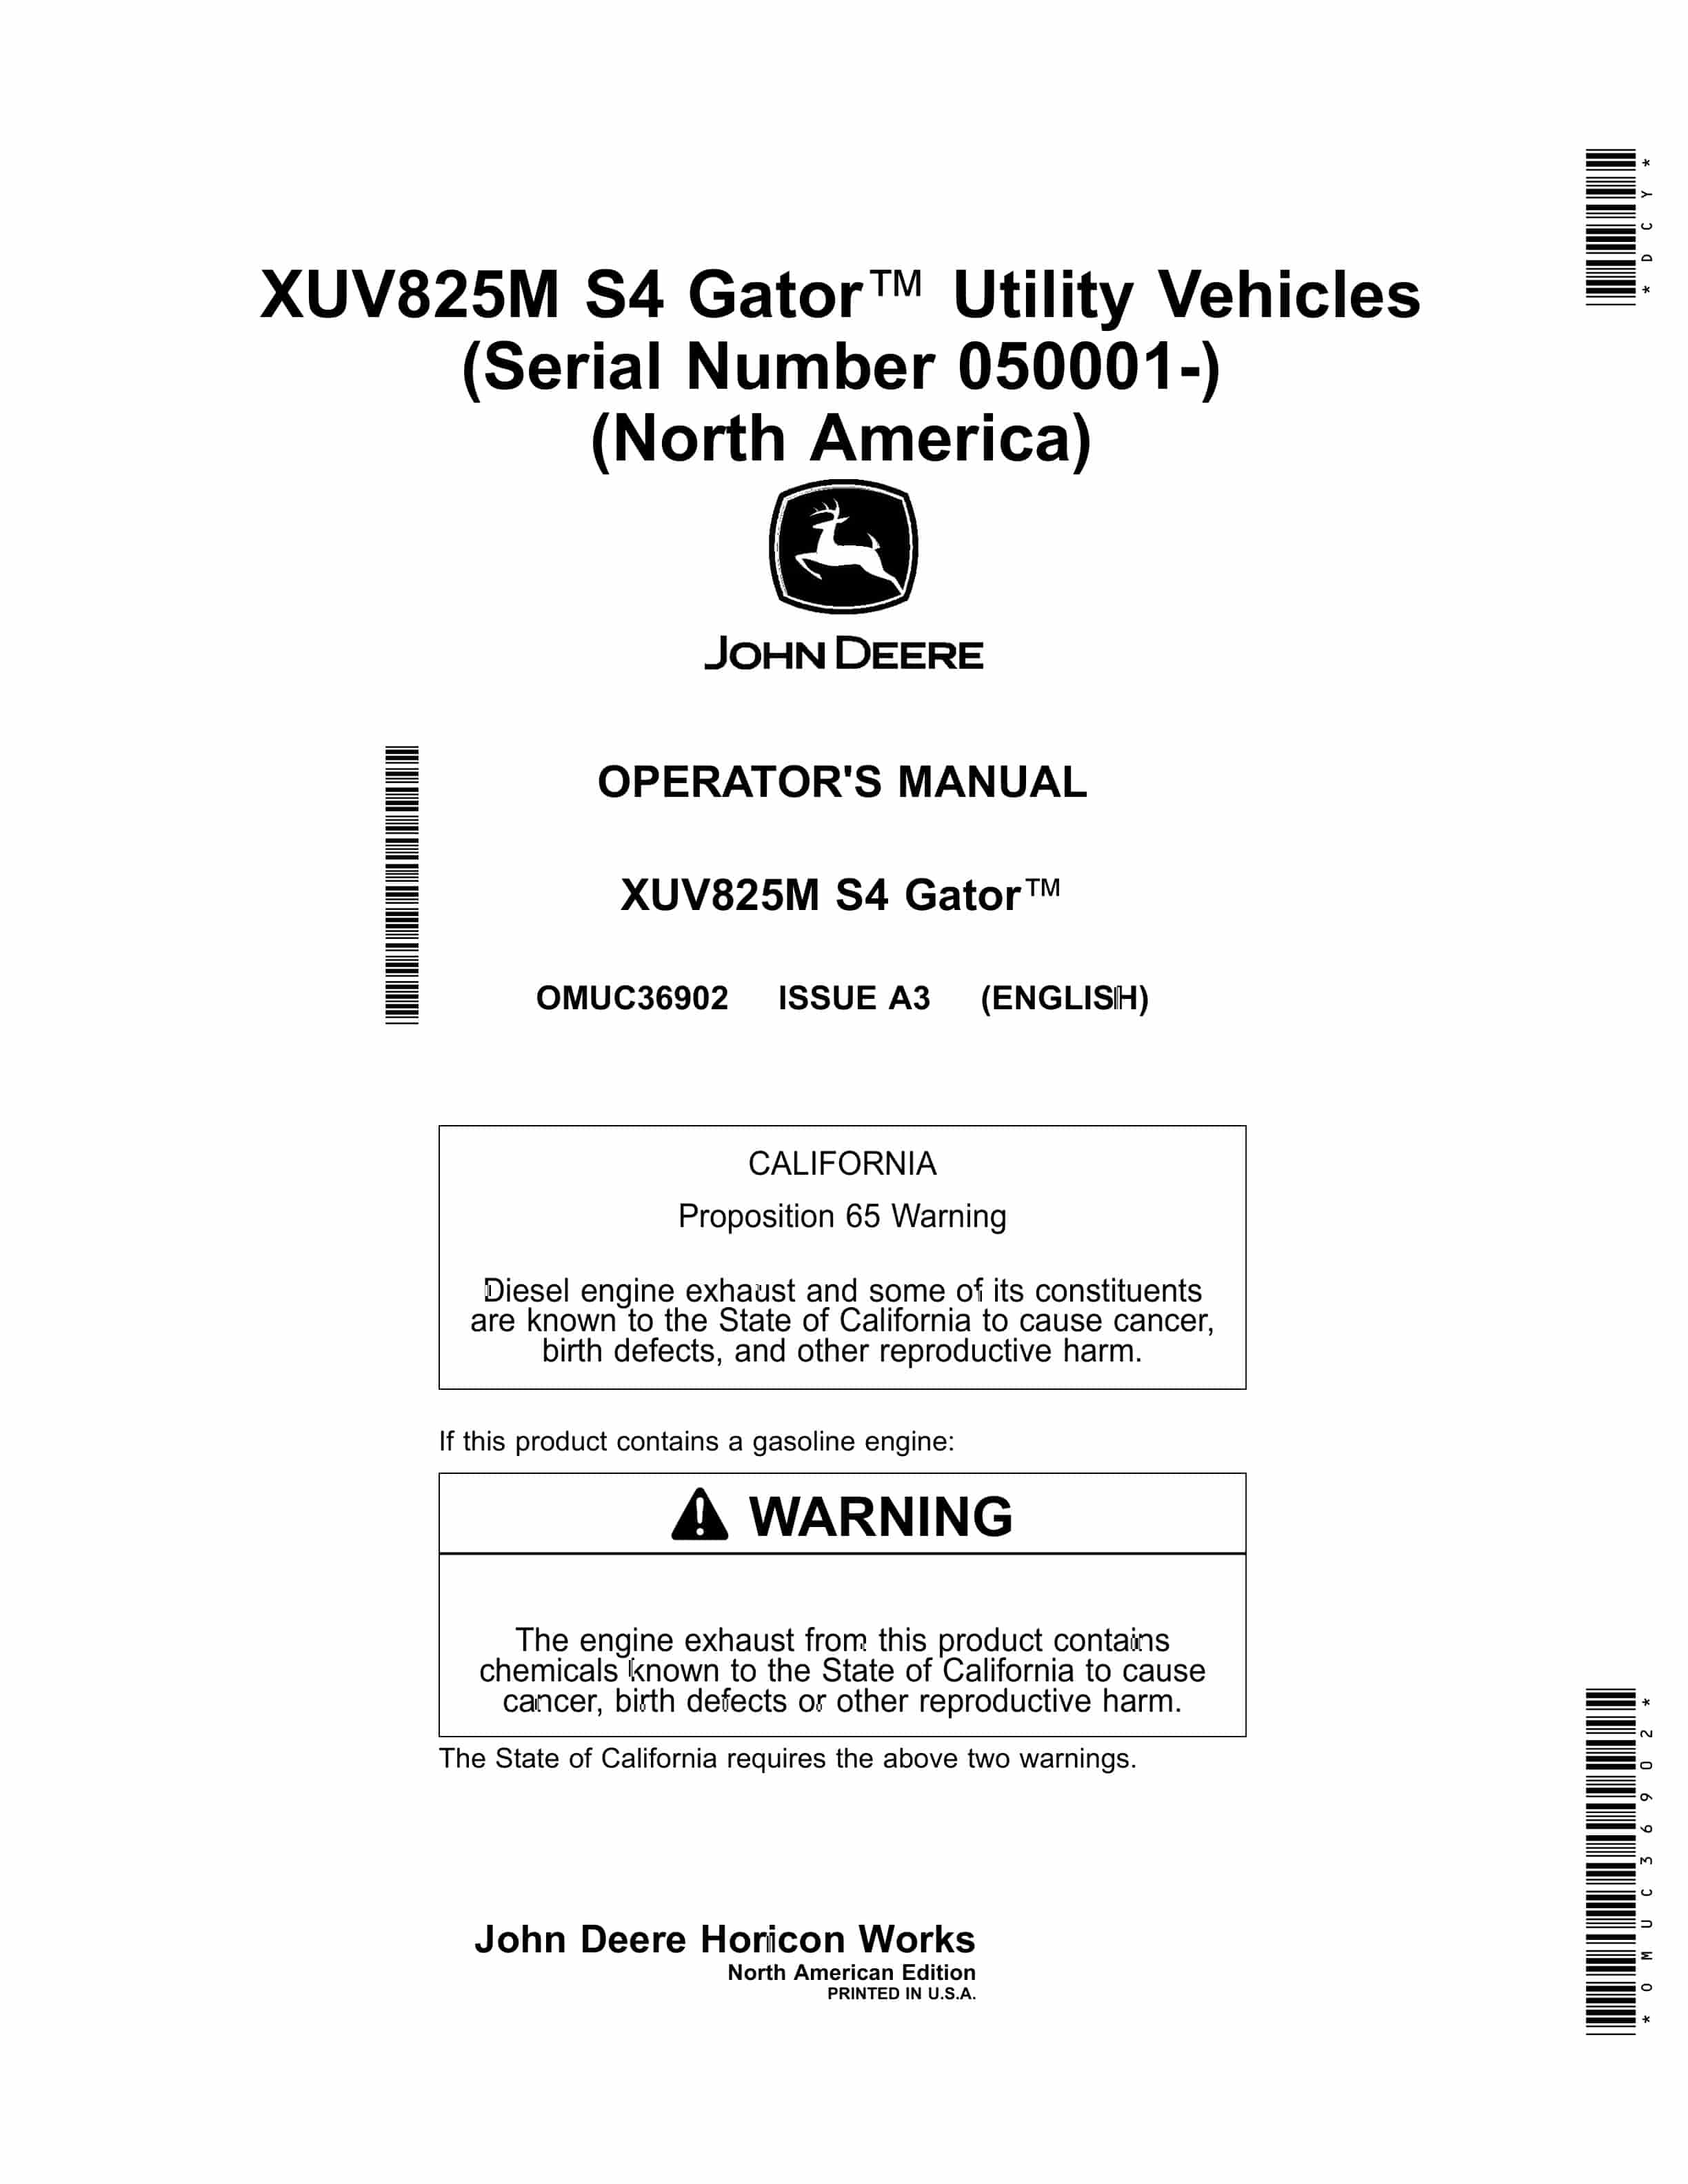 John Deere XUV825M S4 Gator Utility Vehicles Operator Manual OMUC36902 1